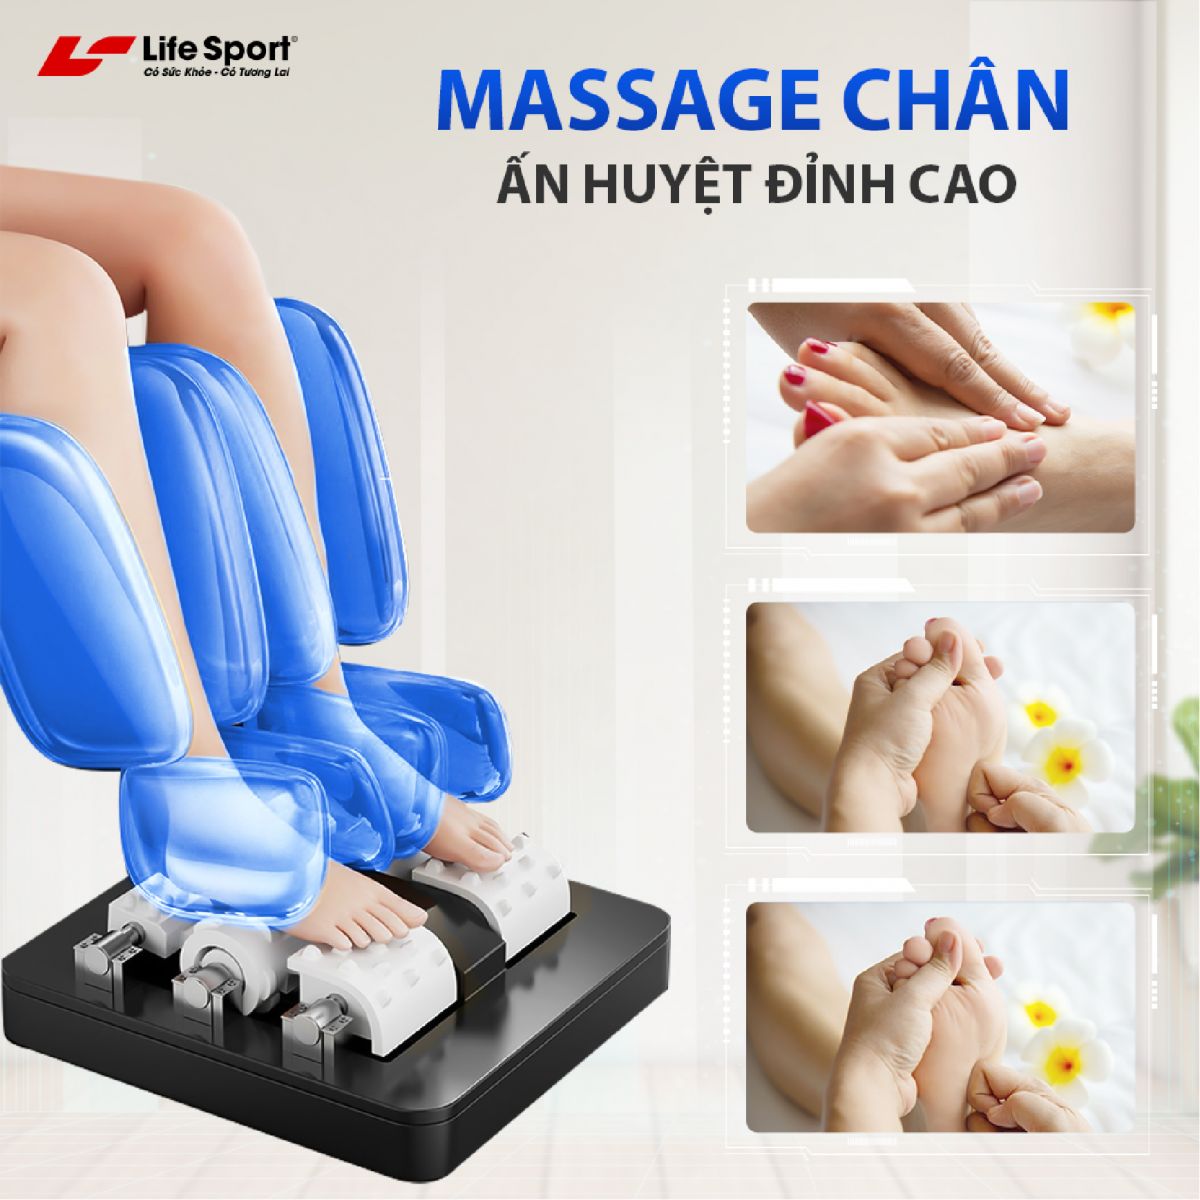 ghe massage lifesport ls666 4